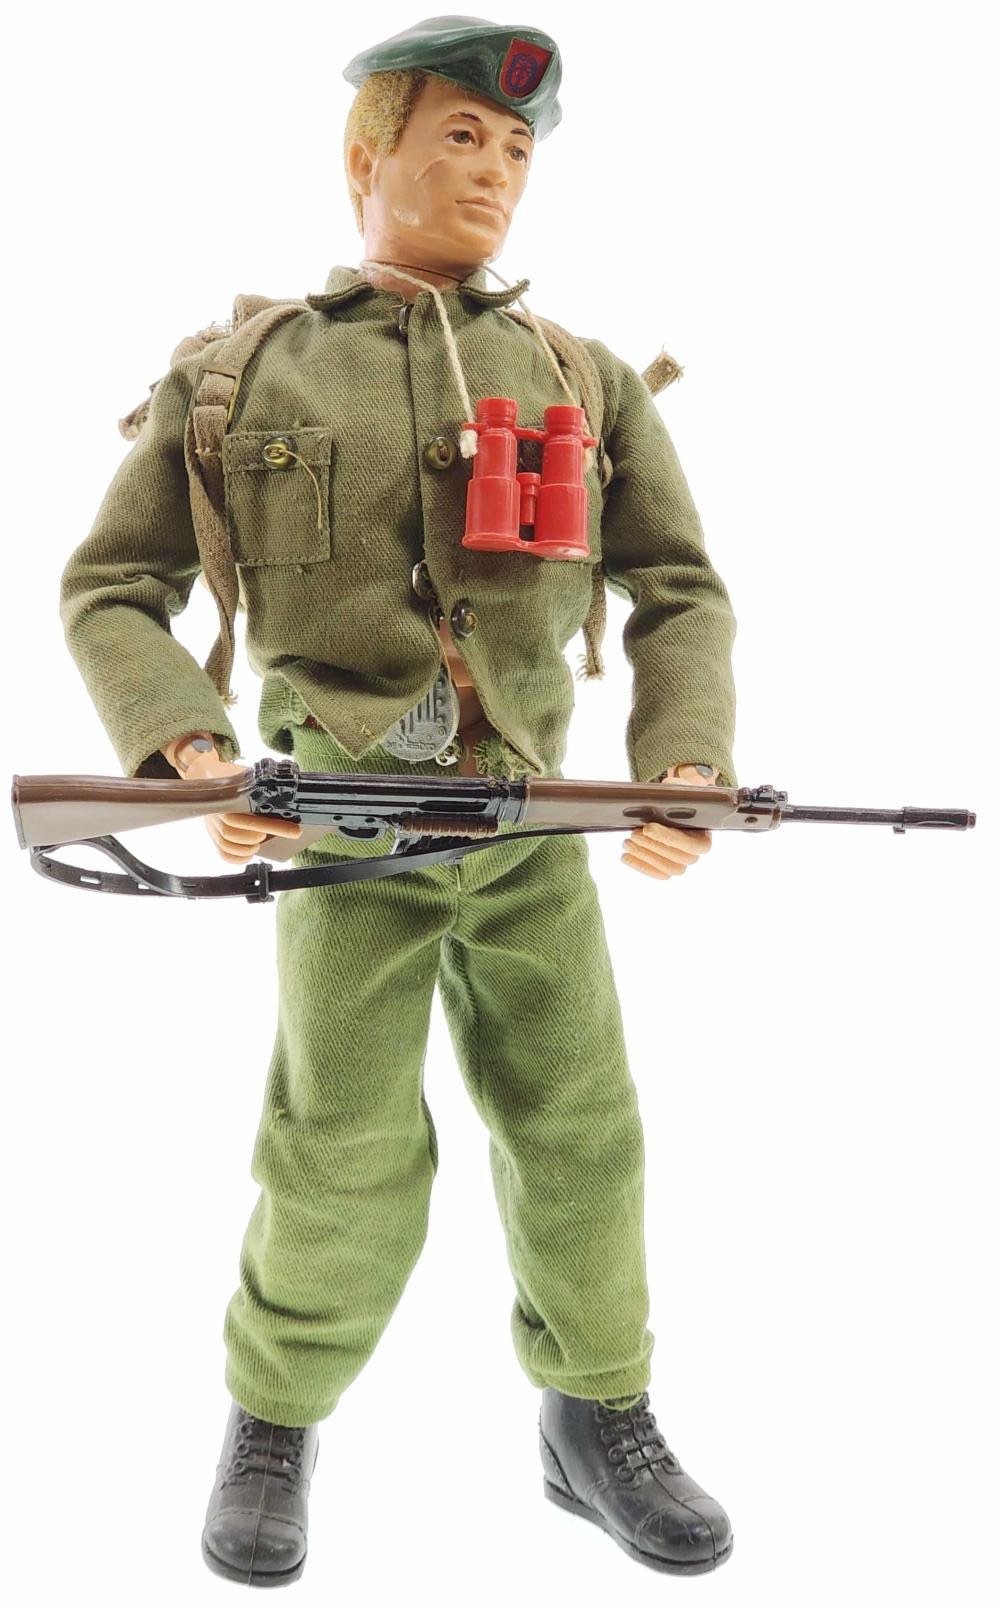 Wooden Footlocker Foot Locker 1960s GI Joe ARAH Hasbro Vintage Army Toy  Figure